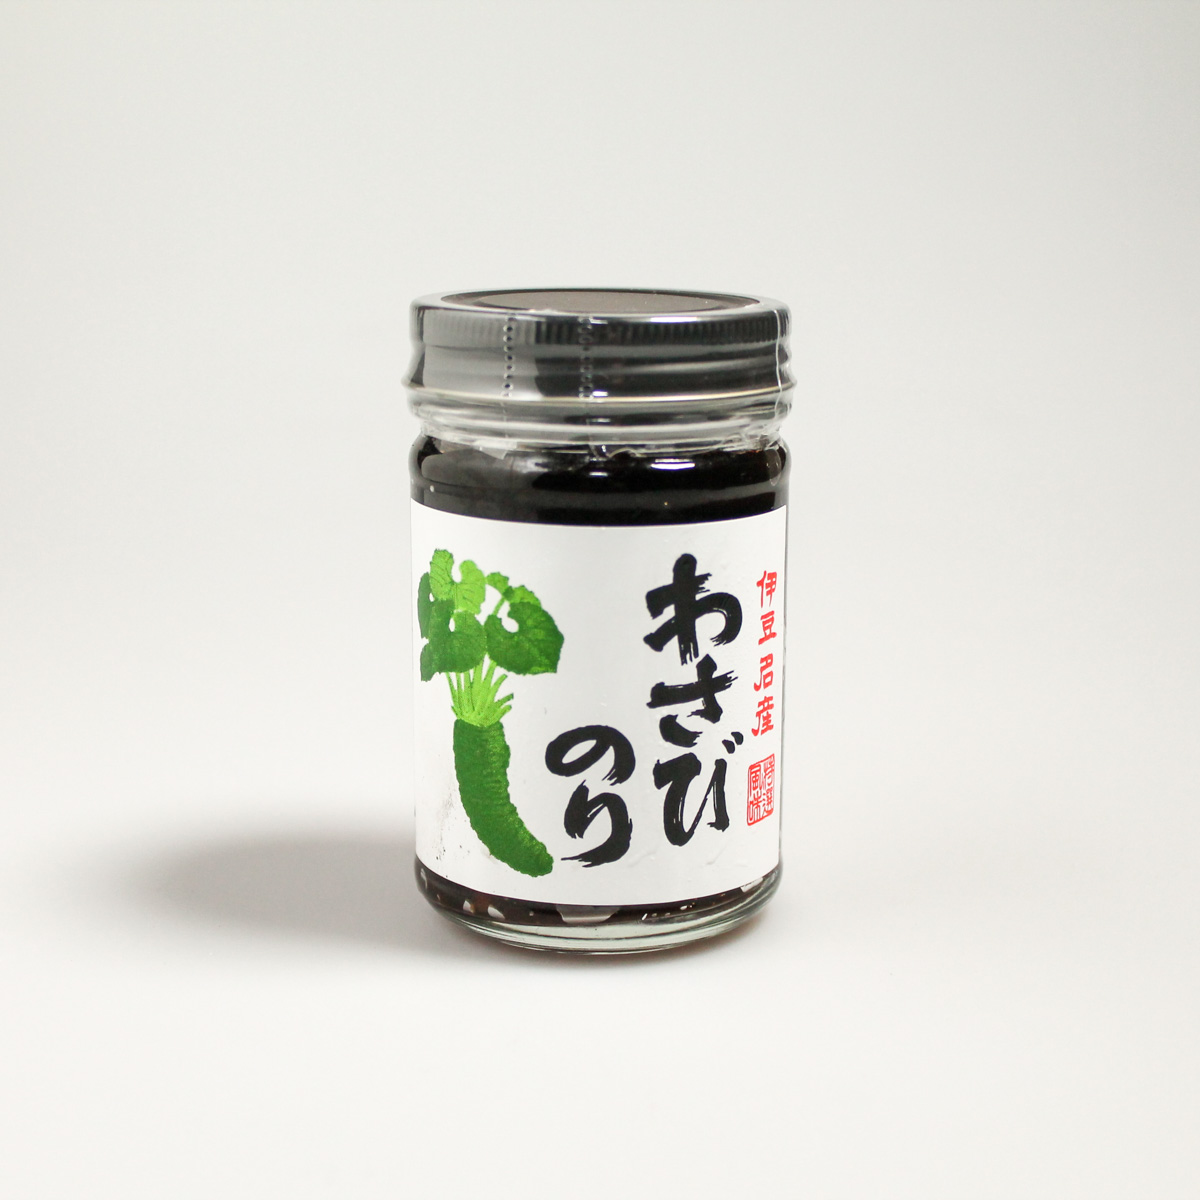 nori confit au wasabi